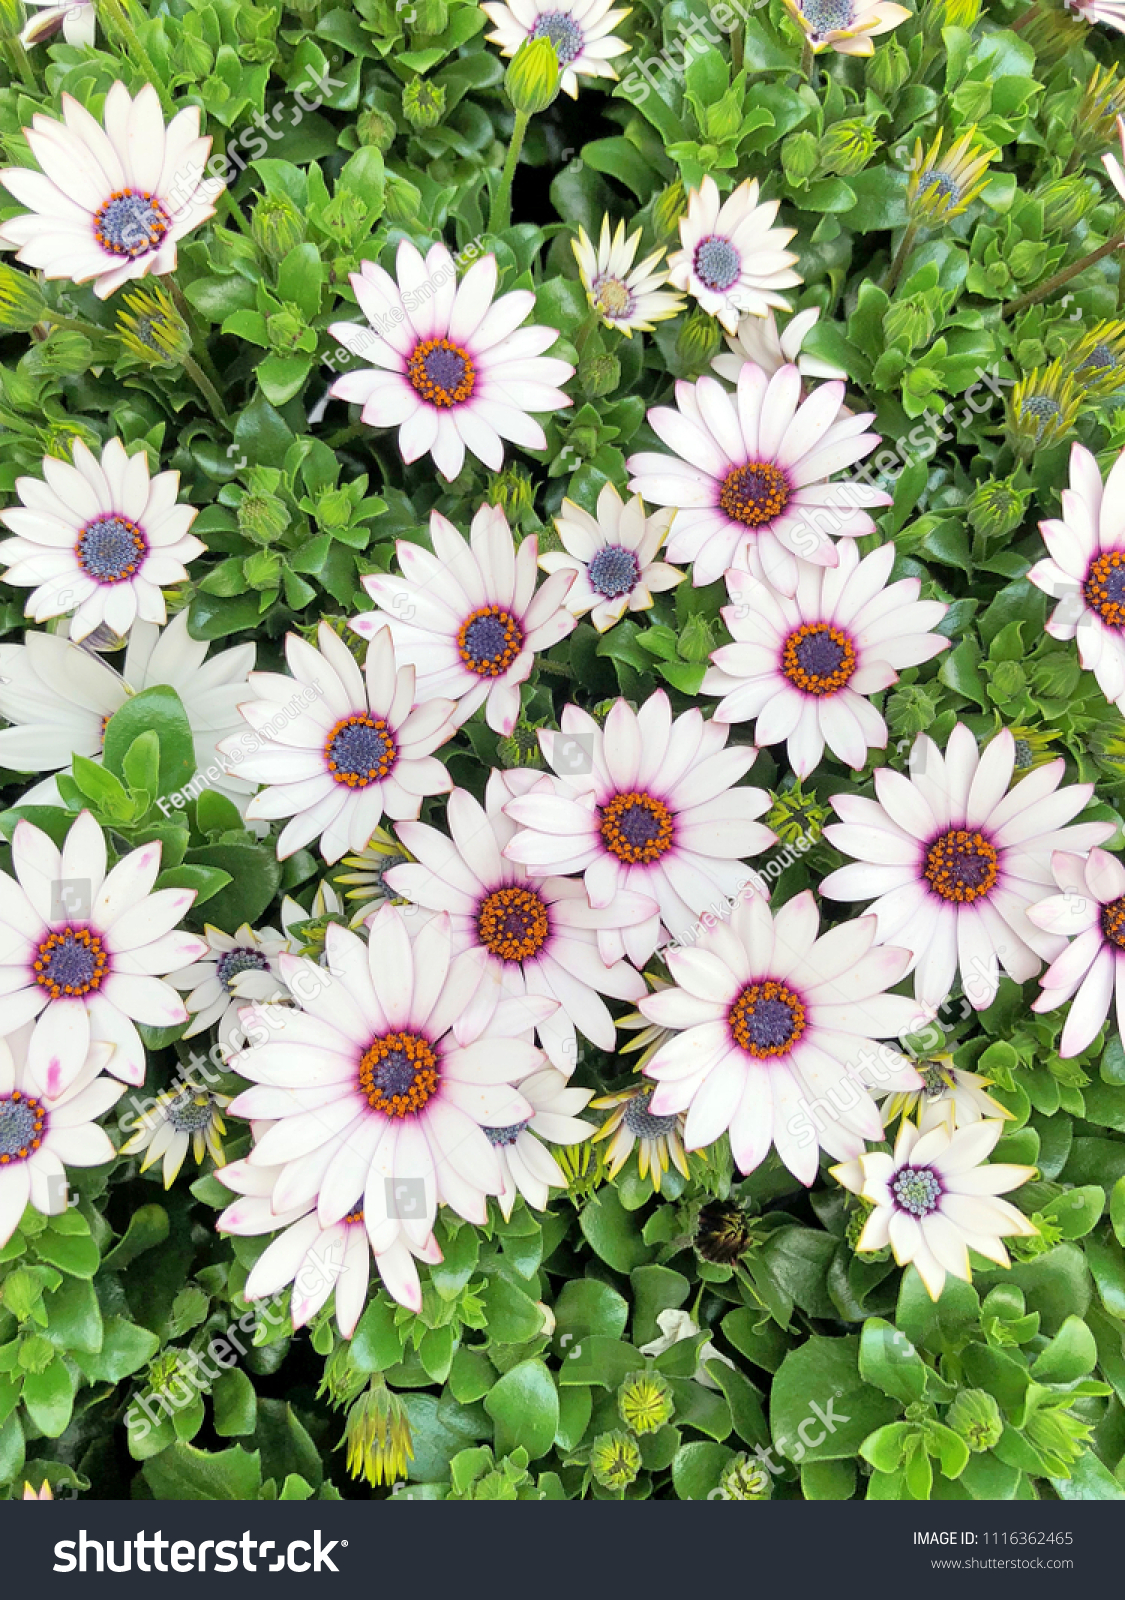 Field White Cape Marguerite Daisy Flowers Stock Photo Edit Now 1116362465